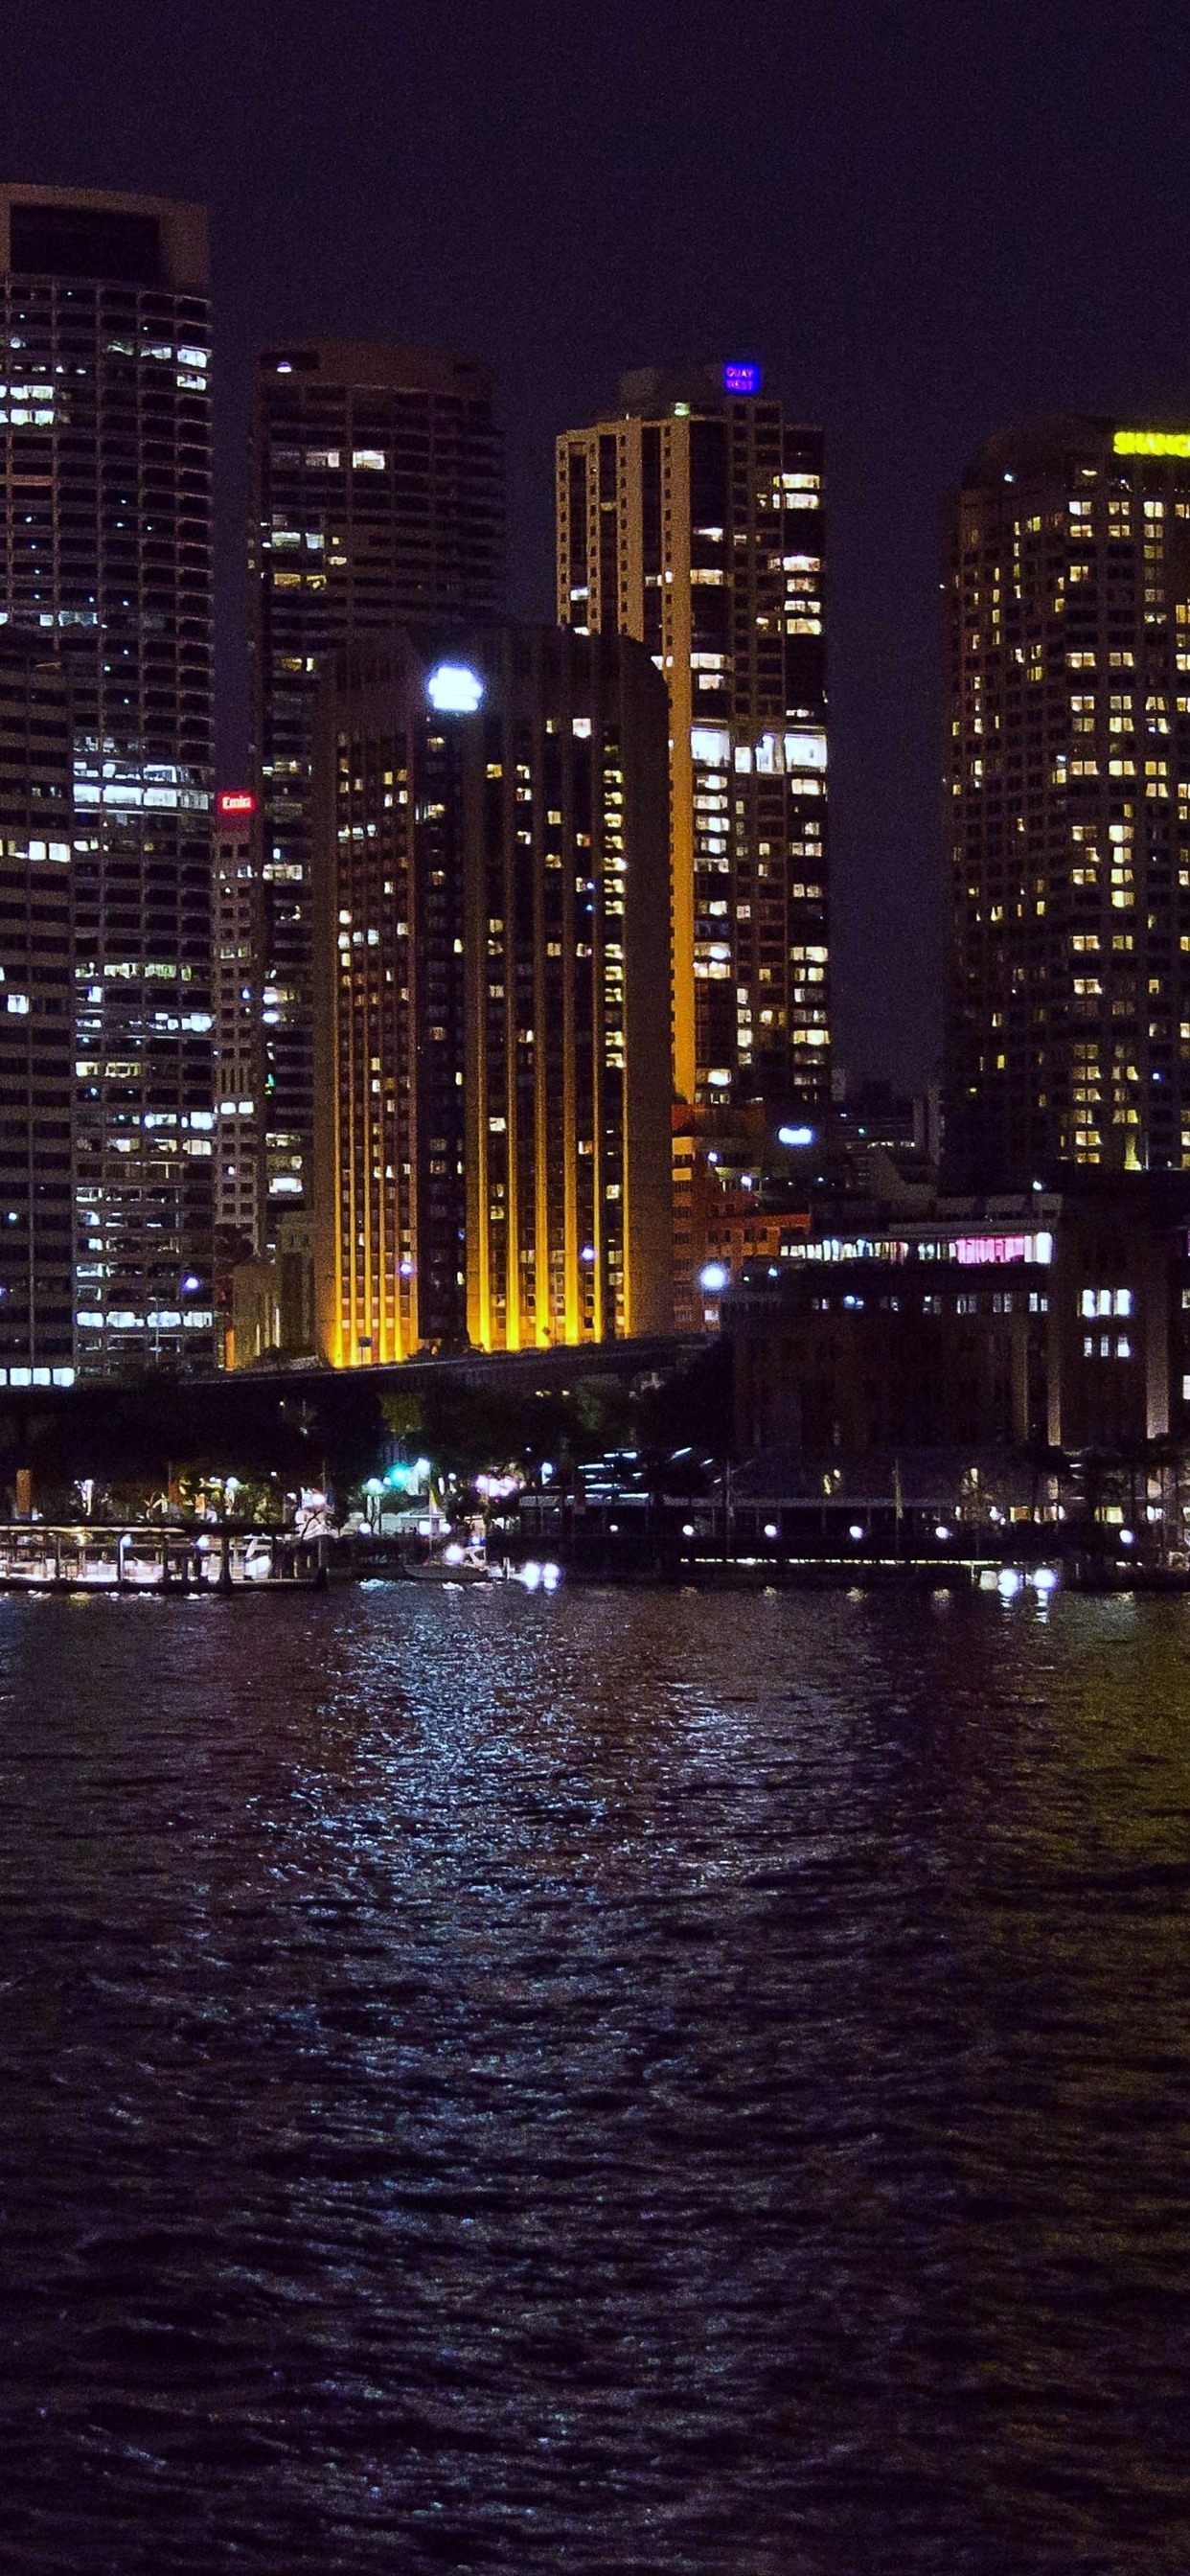 Australia Buildings Lights At Night Wallpapers